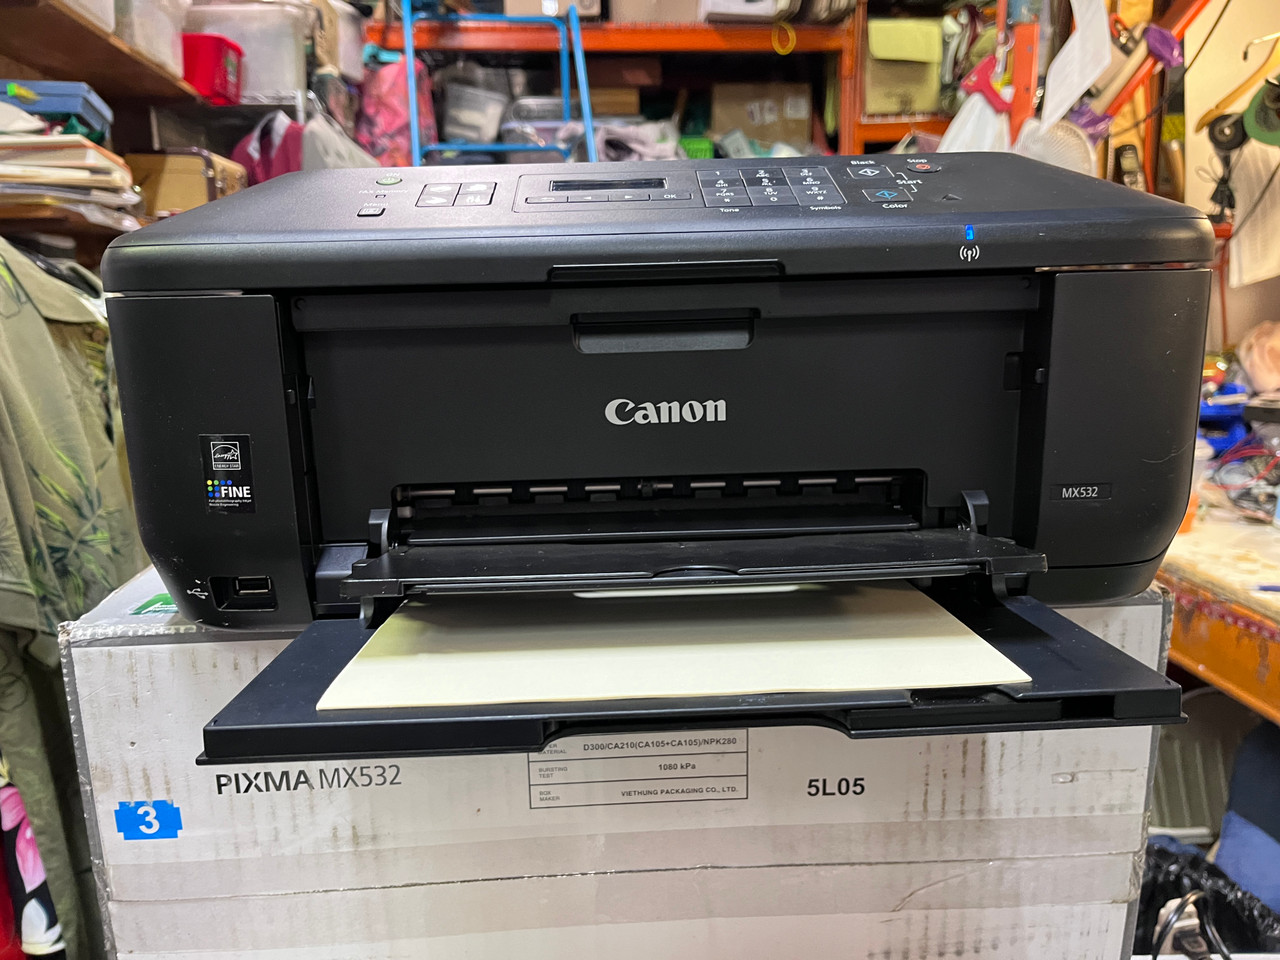 Canon Pixima MX532 Printer, Copier, Scanner, Fax